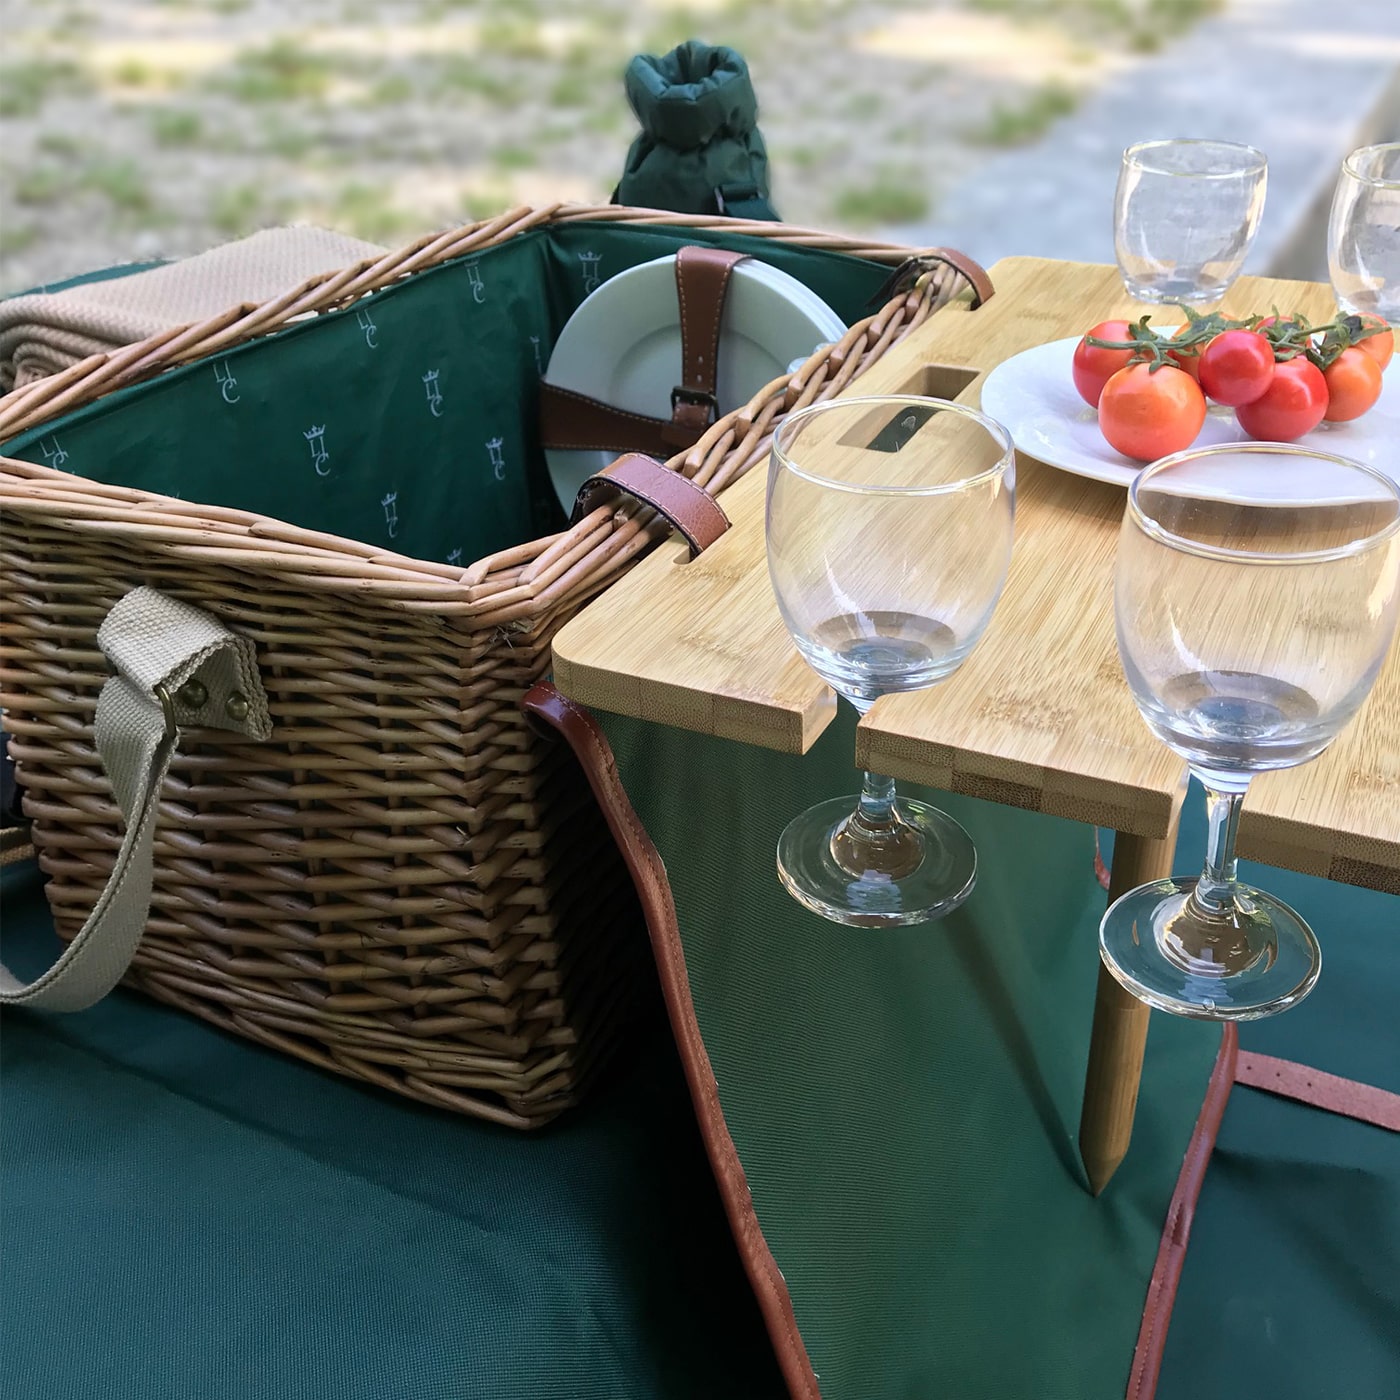 Cesta picnic de cuero Saint-Honoré verde - 4 personas